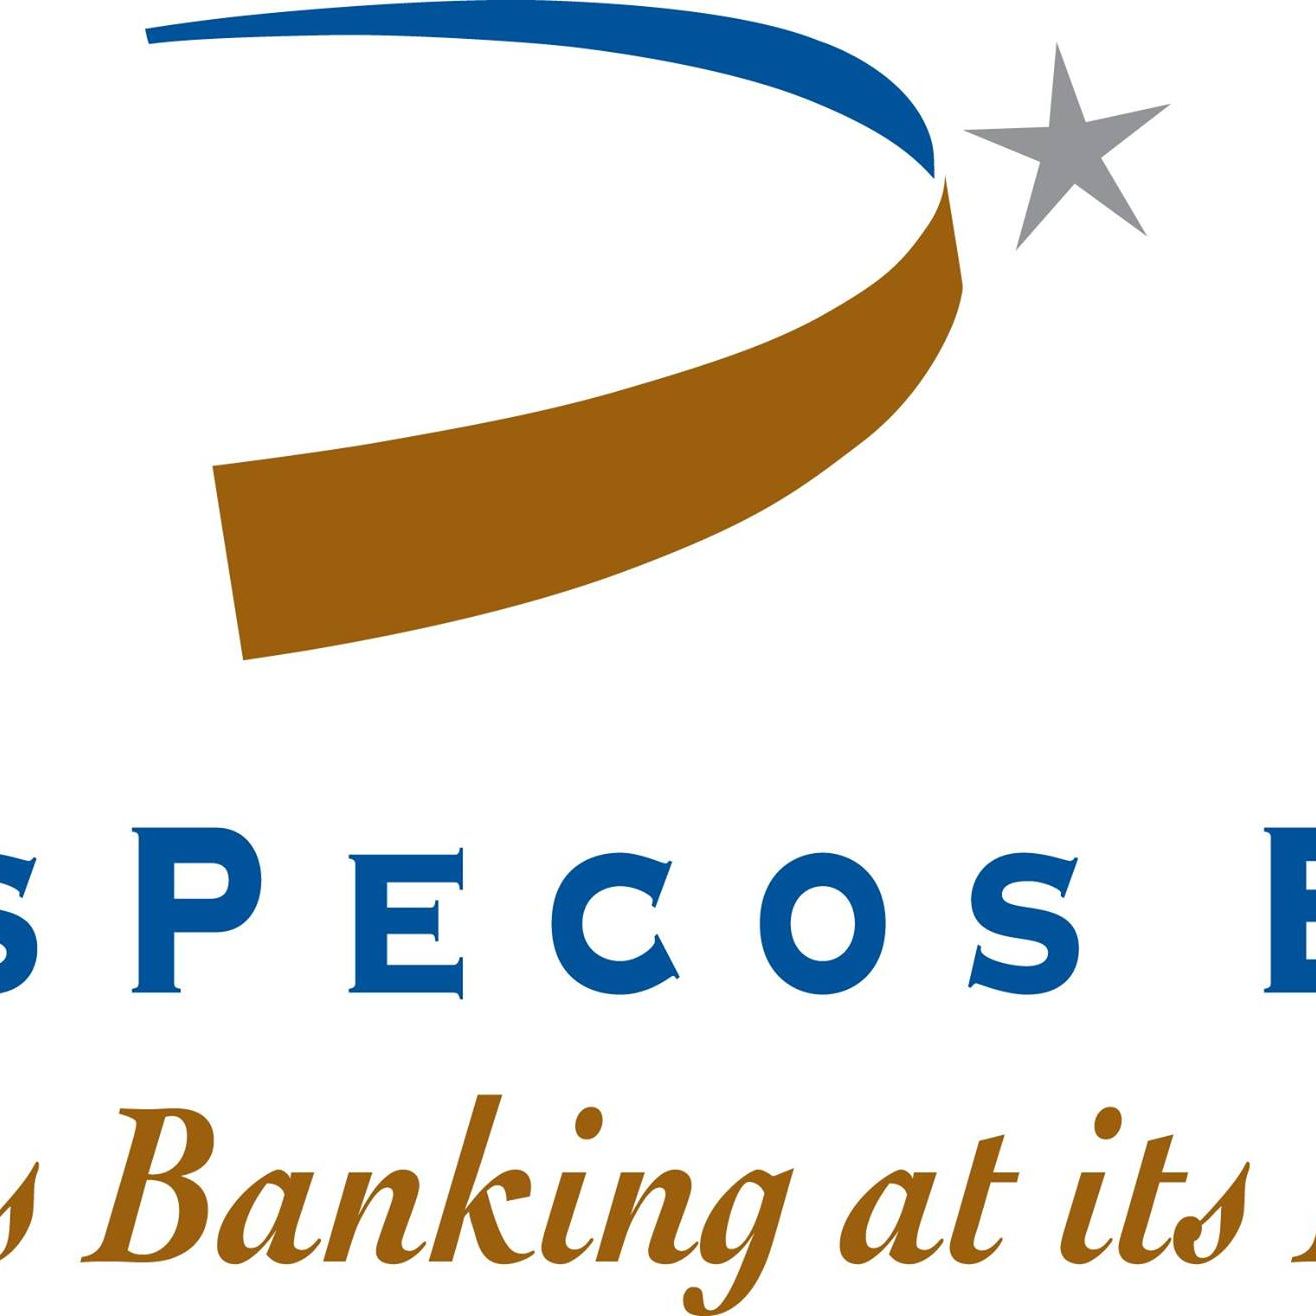 TransPecos Bank